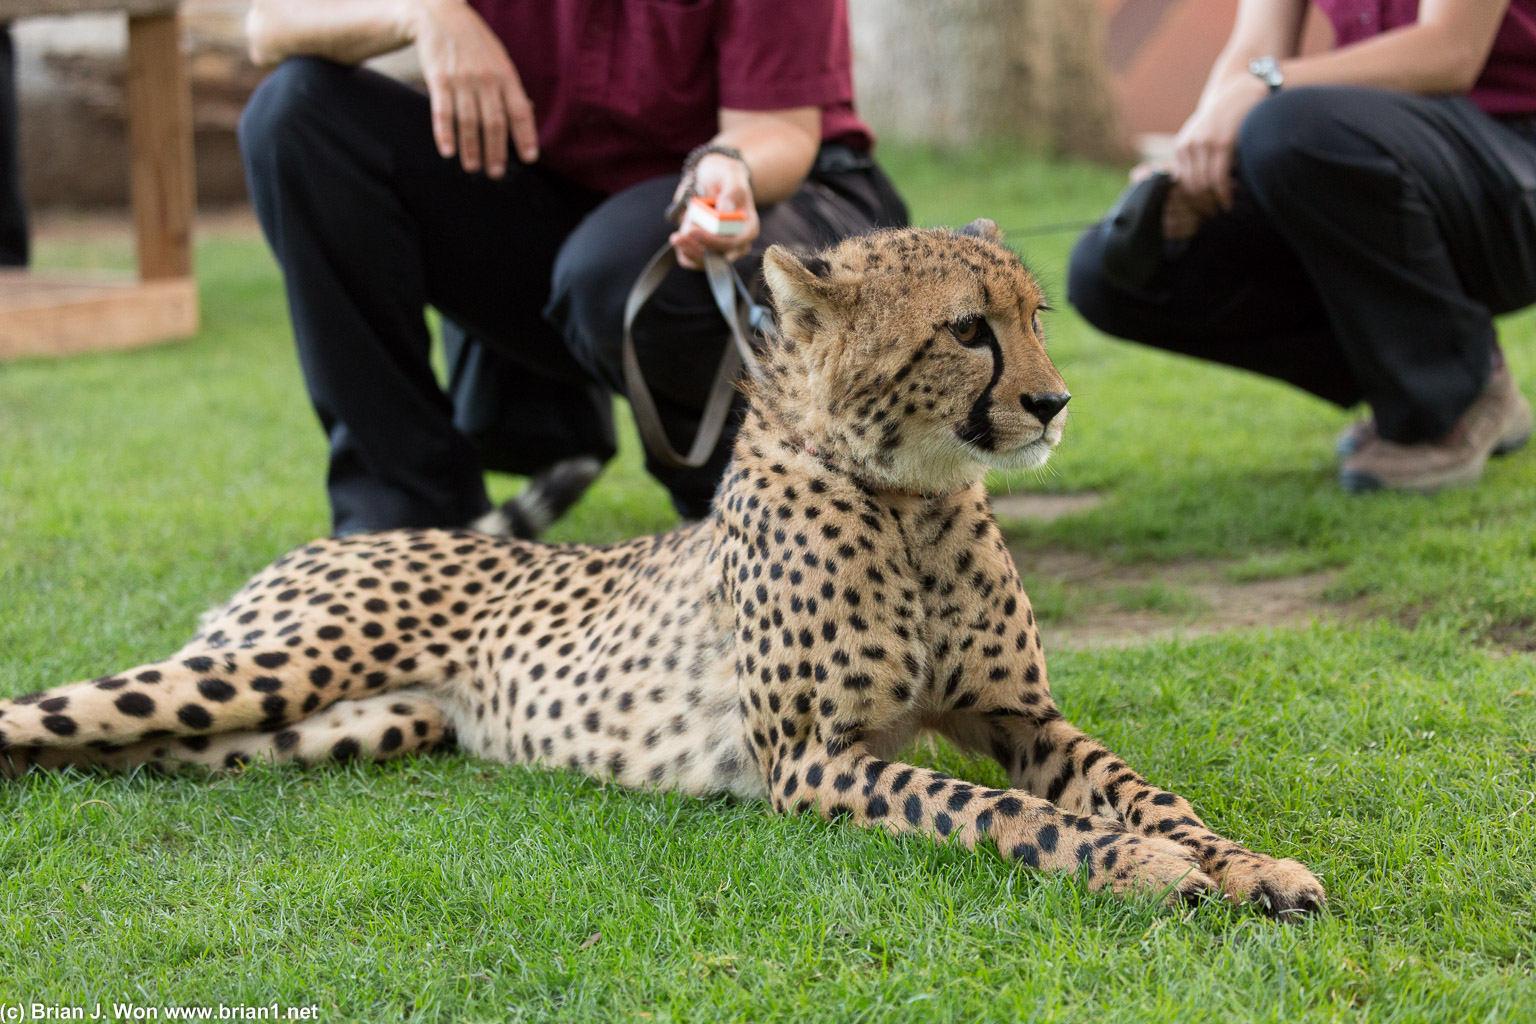 Because we need one more cheetah photo.